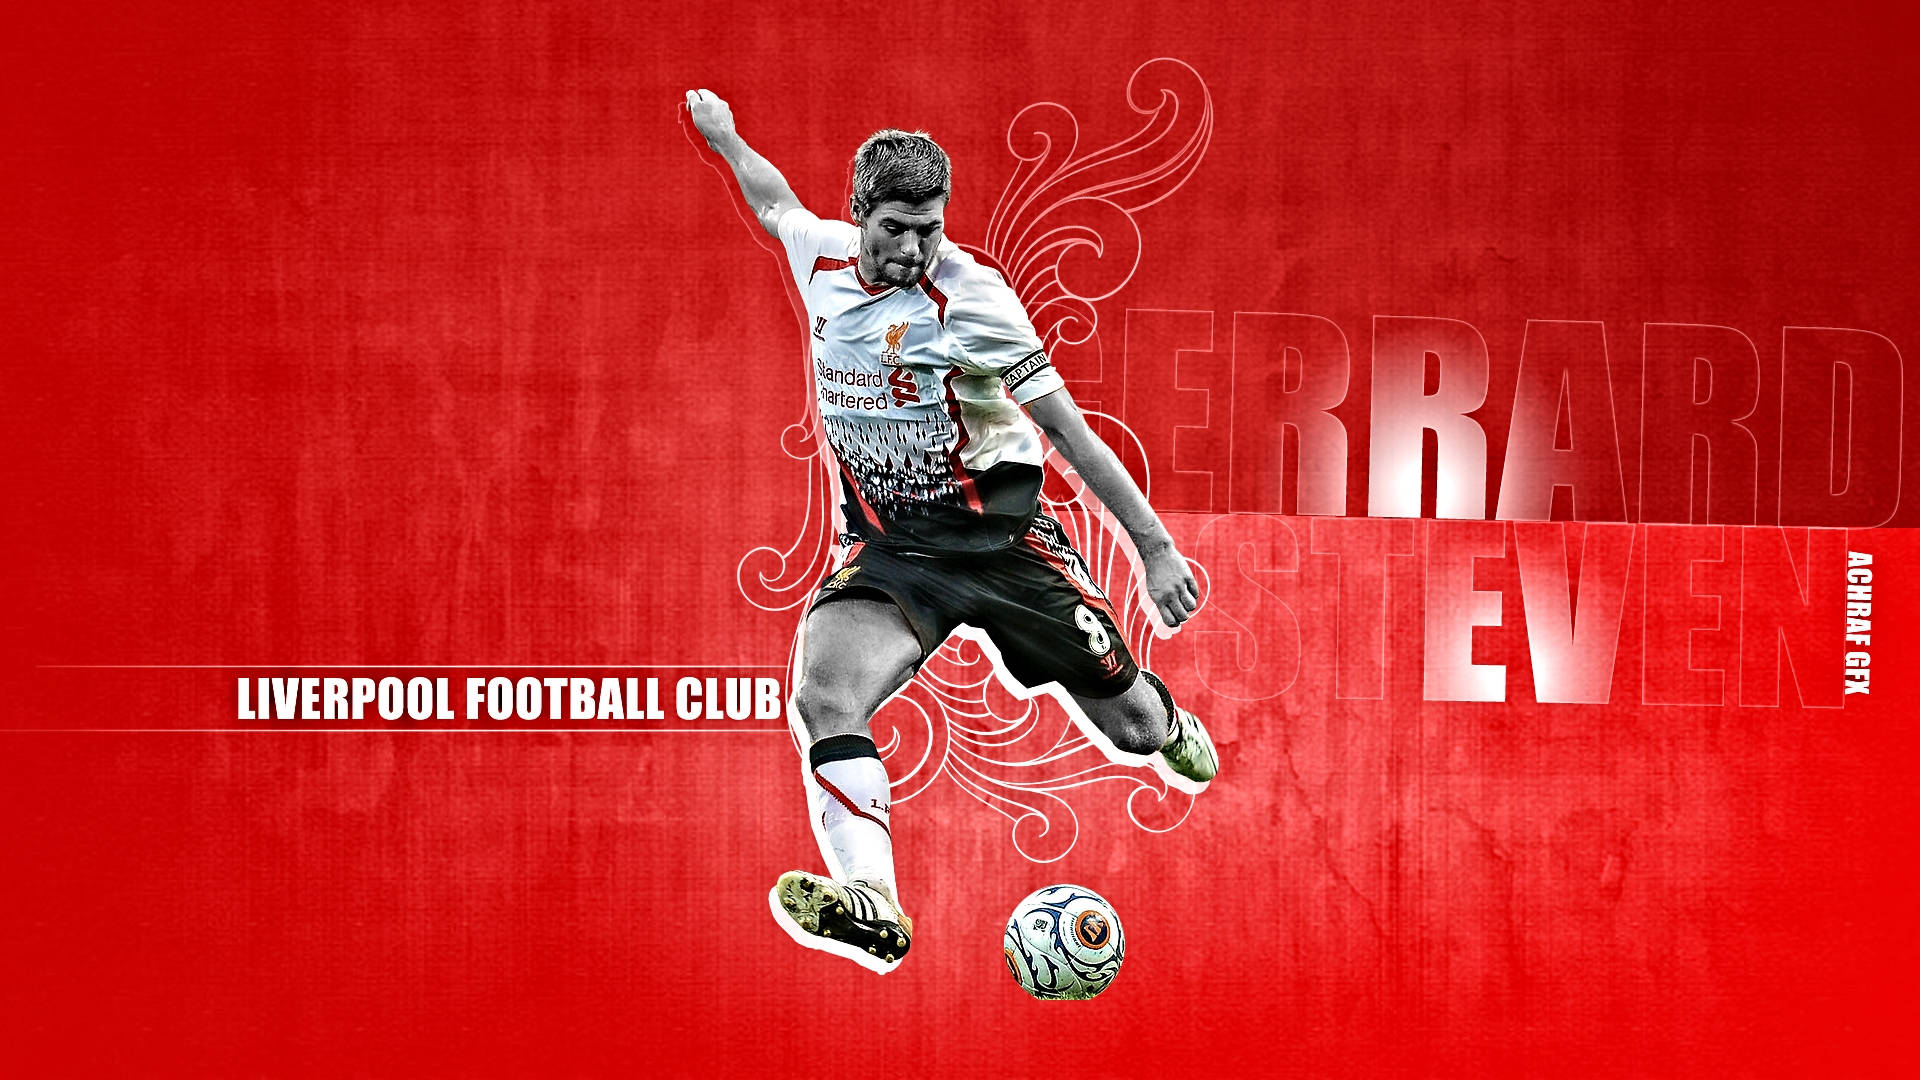 Steven Gerrard Liverpool Football Club Captain